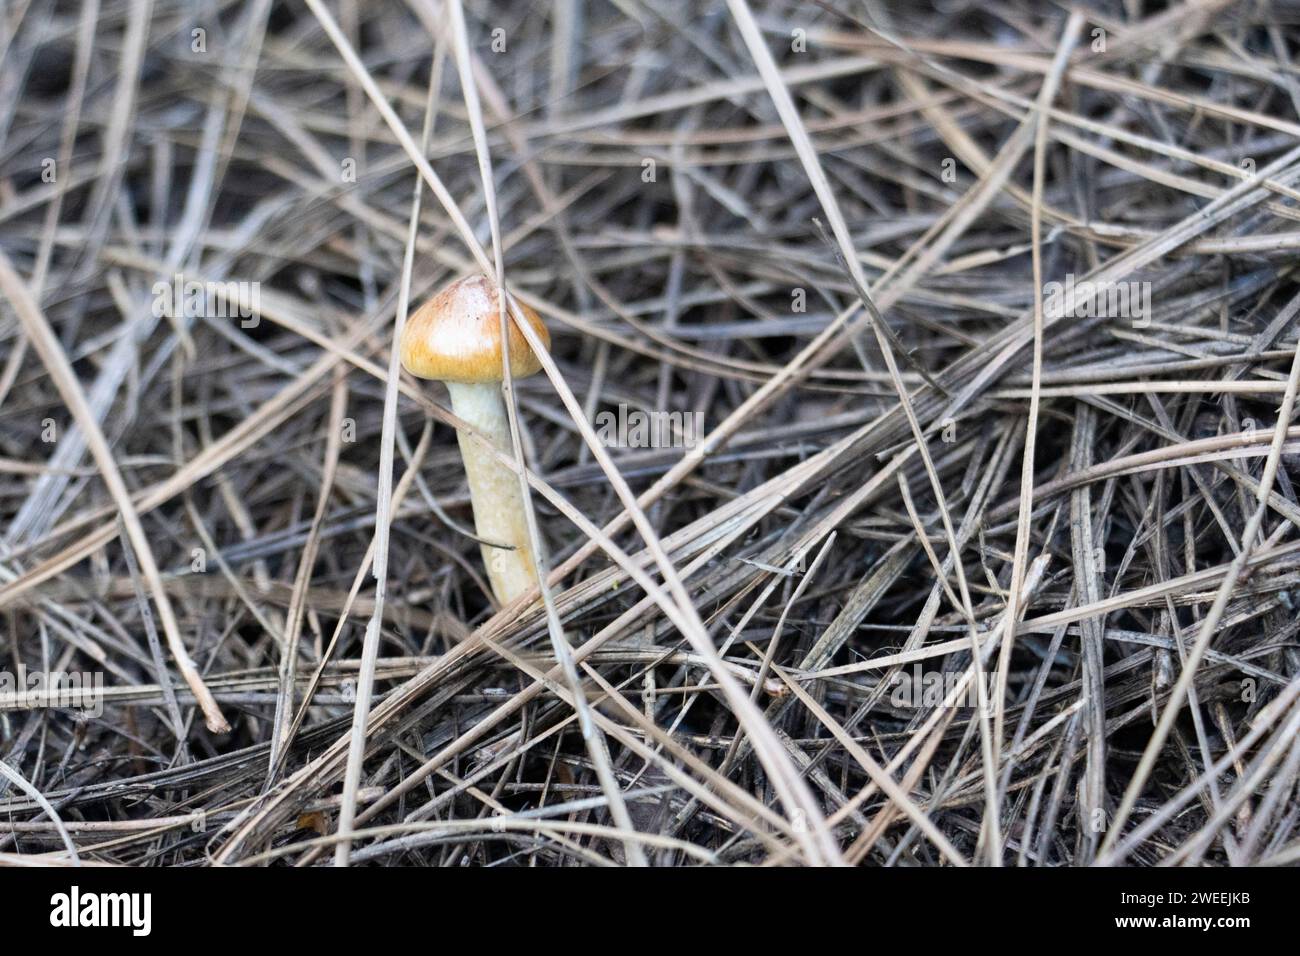 a mushroom growing among the pine needles. pine needle soil. texture Stock Photo